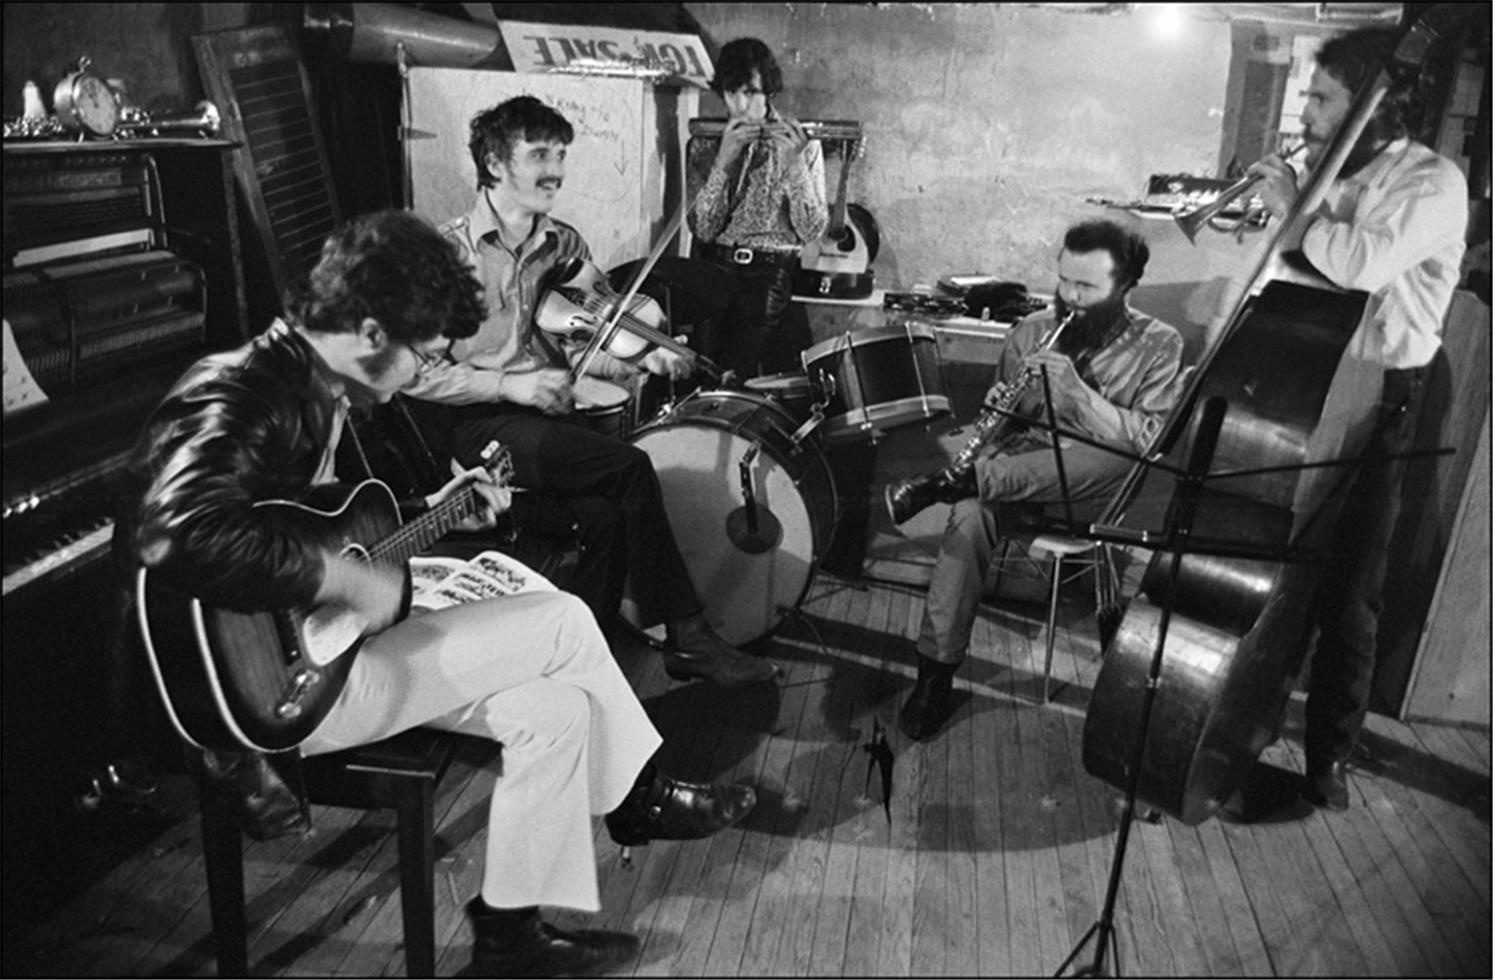 Elliott Landy Black and White Photograph - The Band in the basement of Rick Danko’s Zena Rd. Home, Woodstock, 1969.